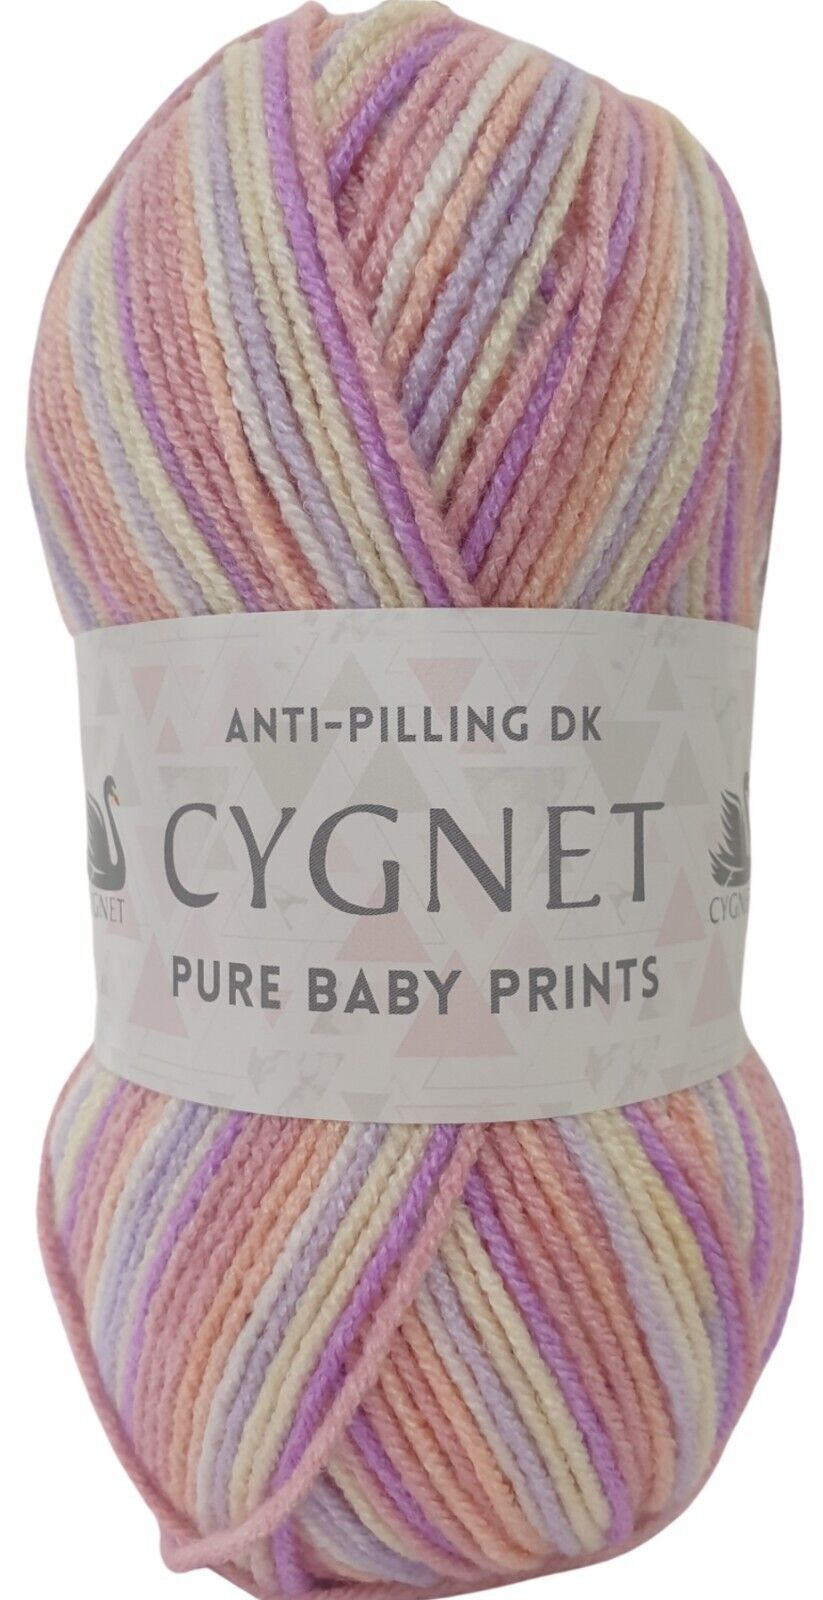 Cygnet PURE BABY PRINTS DK Knitting Yarn / Wool - 100g - Pink Blossom